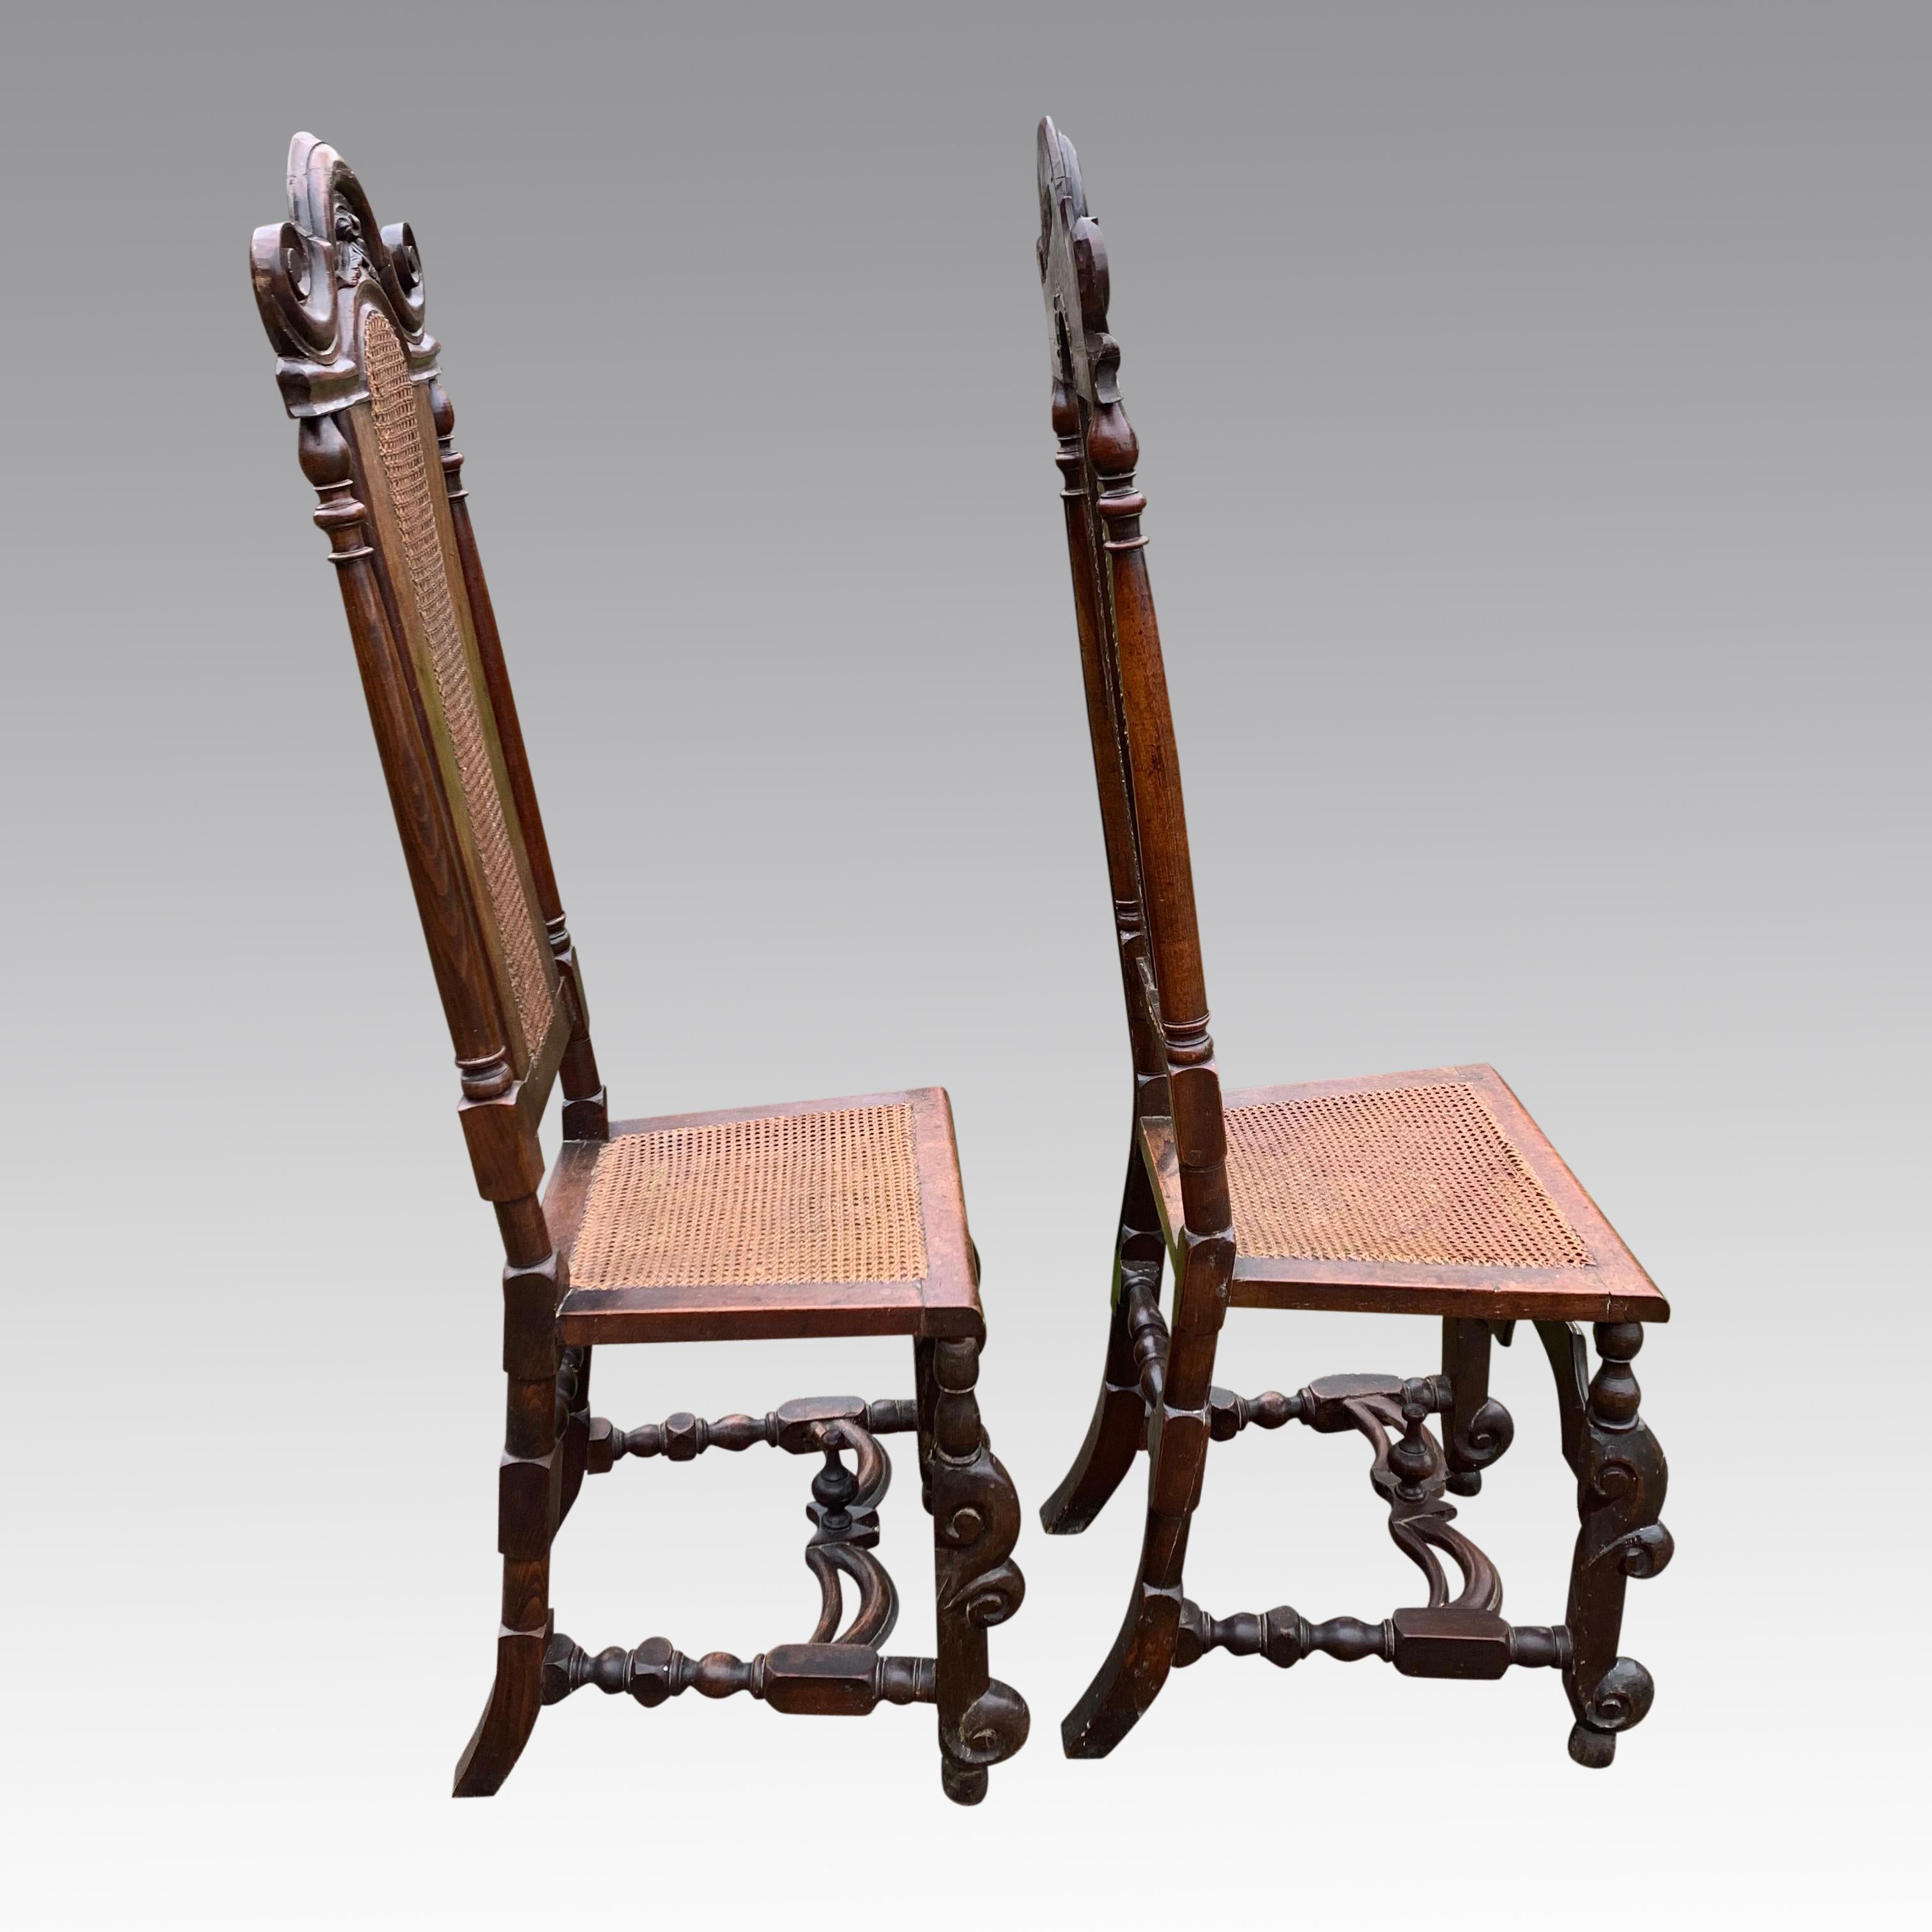 19th century chair styles